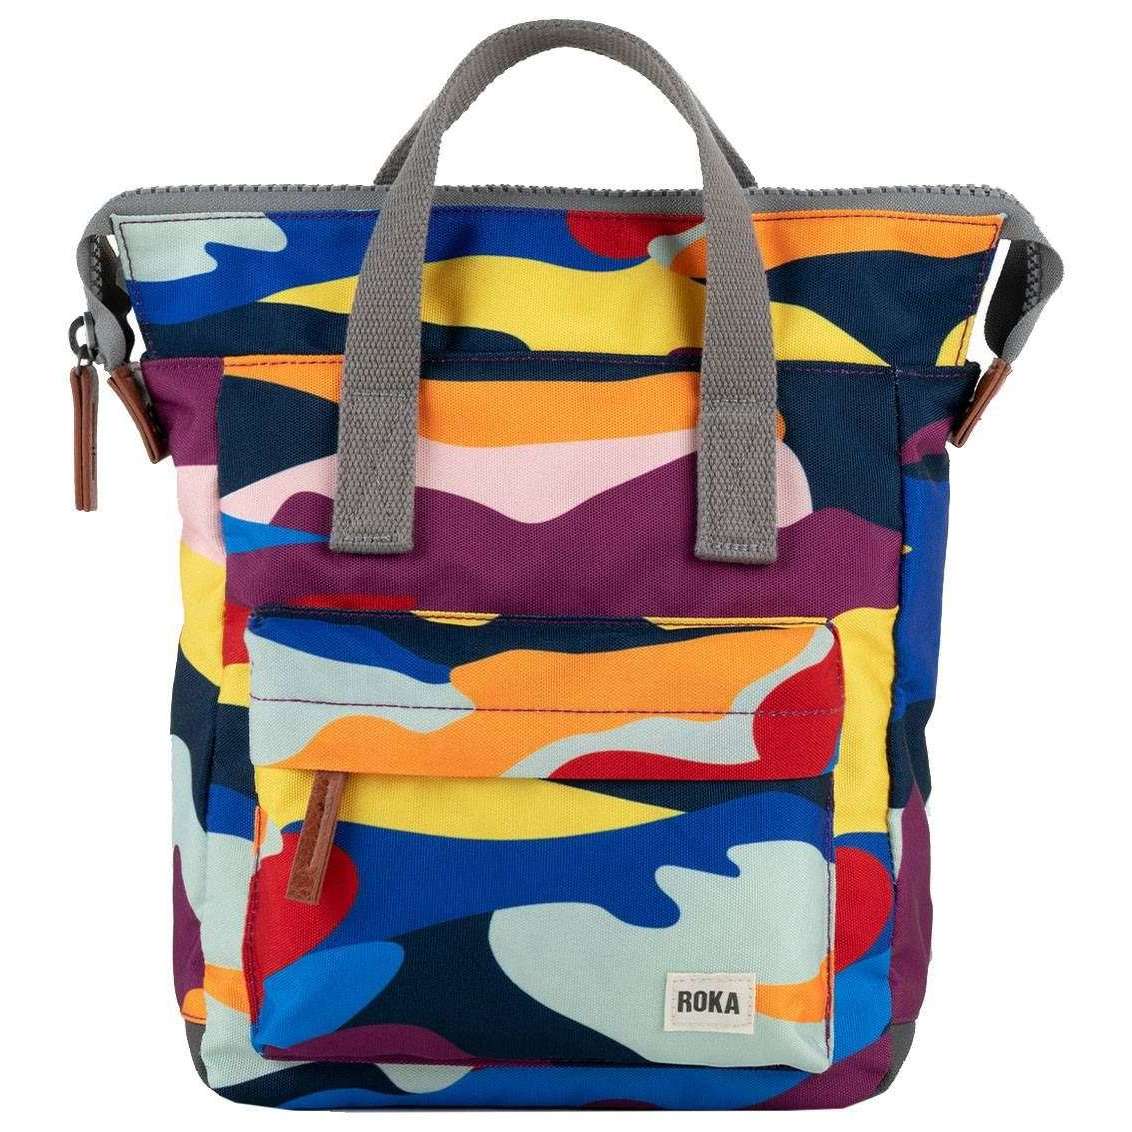 Roka Bantry B Small Sustainable Canvas Camo Backpack - Multi-colour